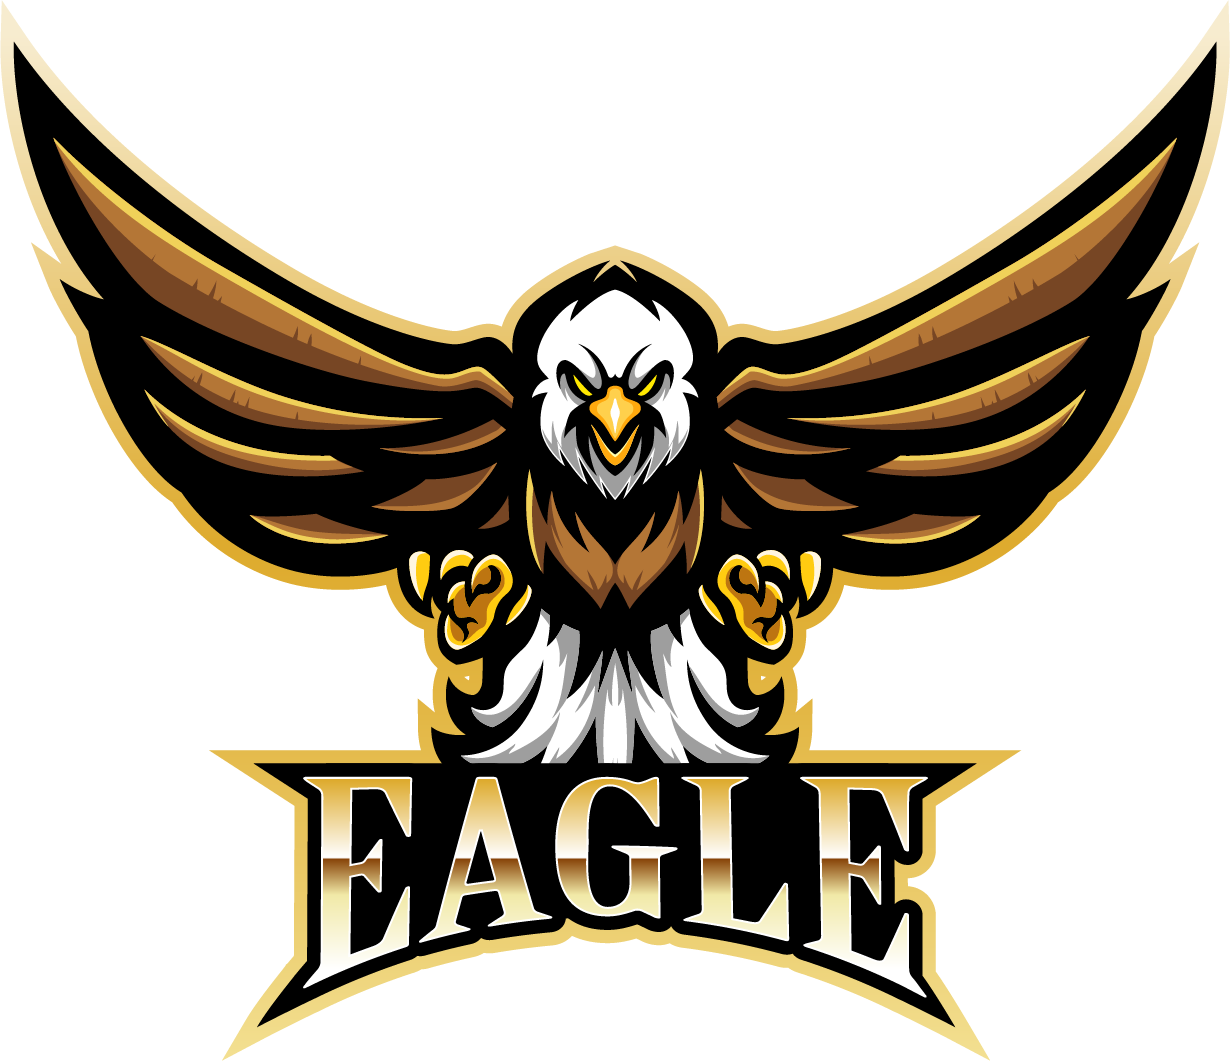 Eagle Esport Mascot Logo By Visink Thehungryjpeg